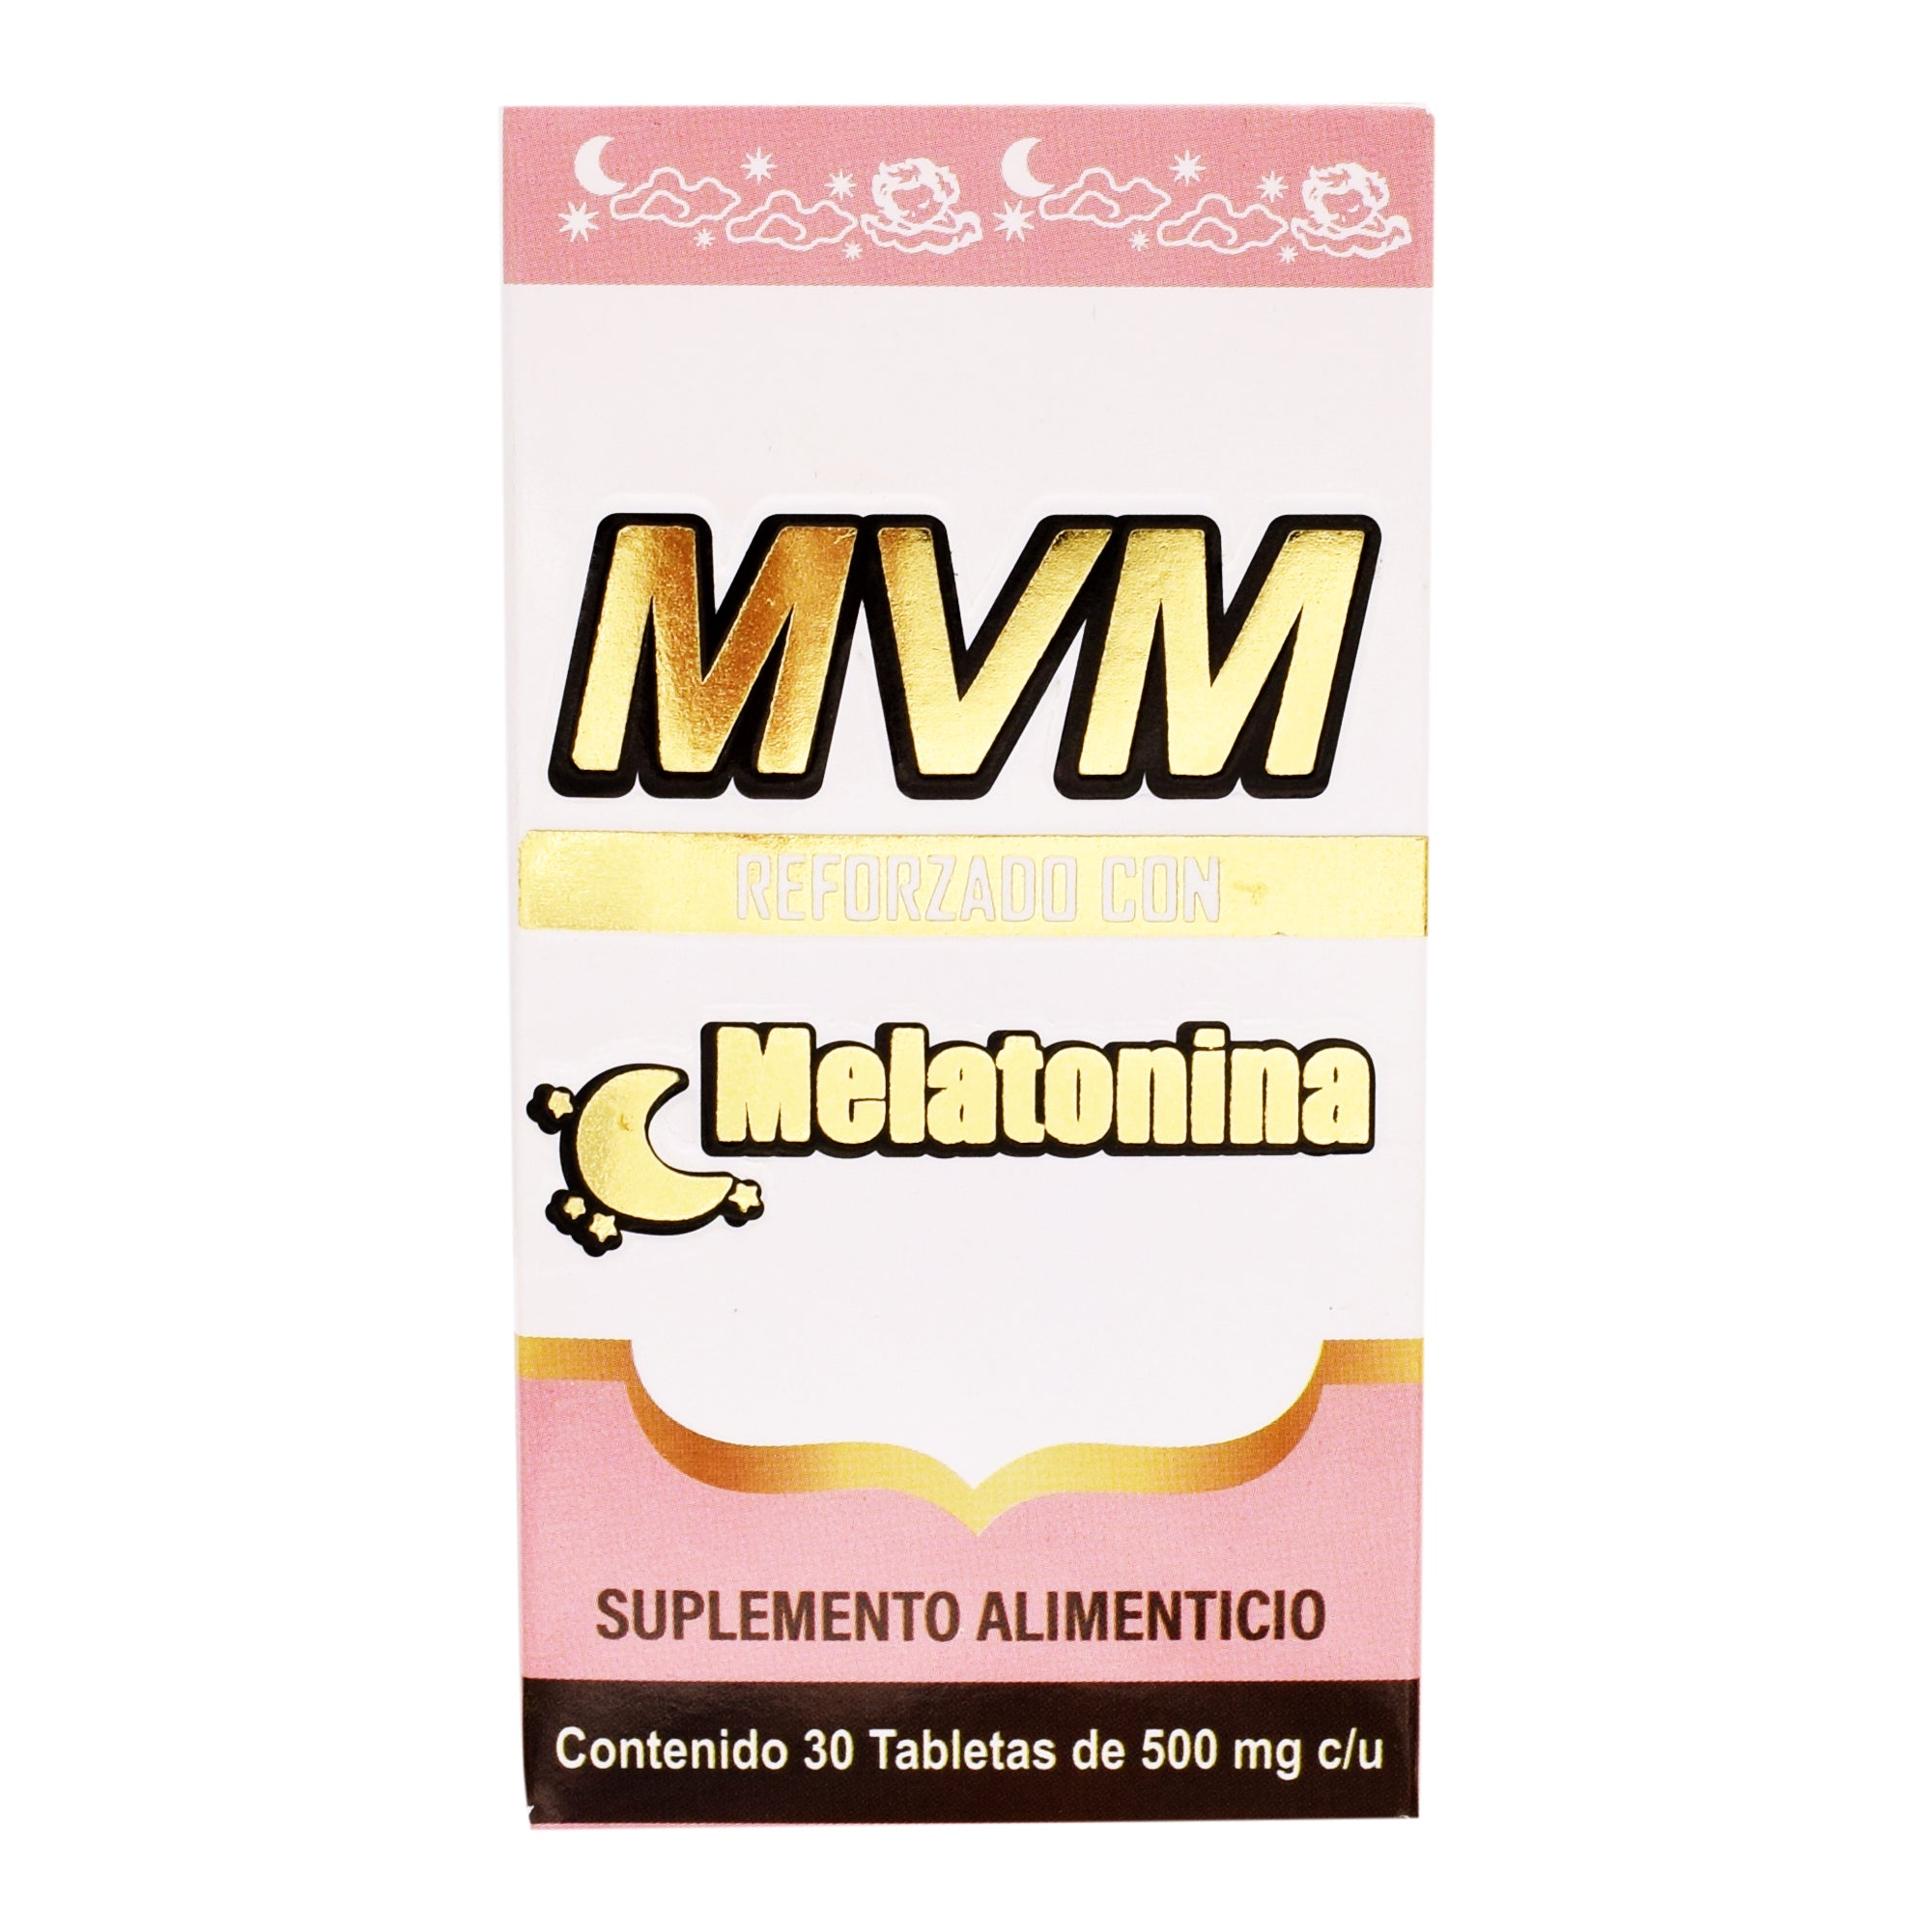 Mvm melatonina 30 tab